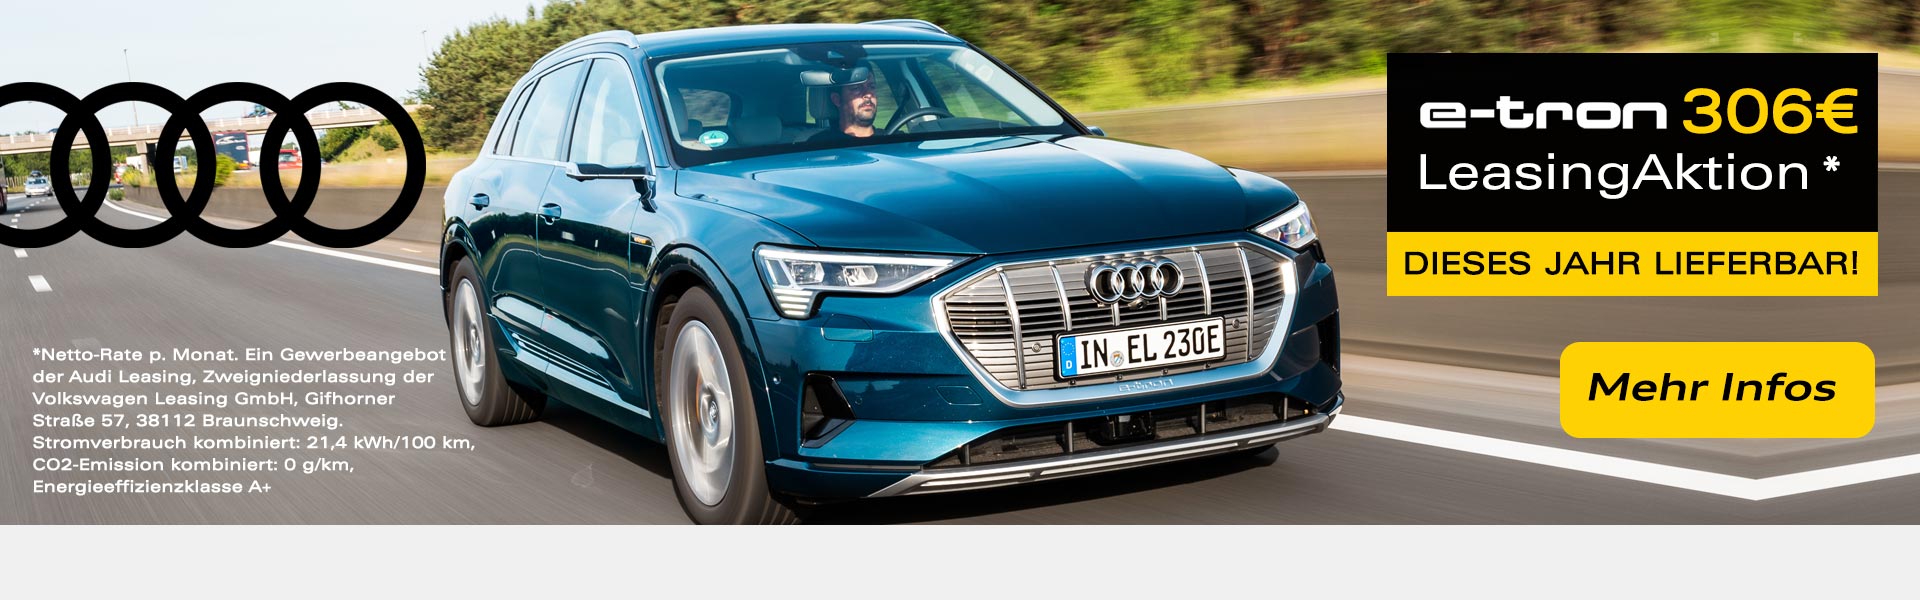 Audi e-tron Leasing Angebot